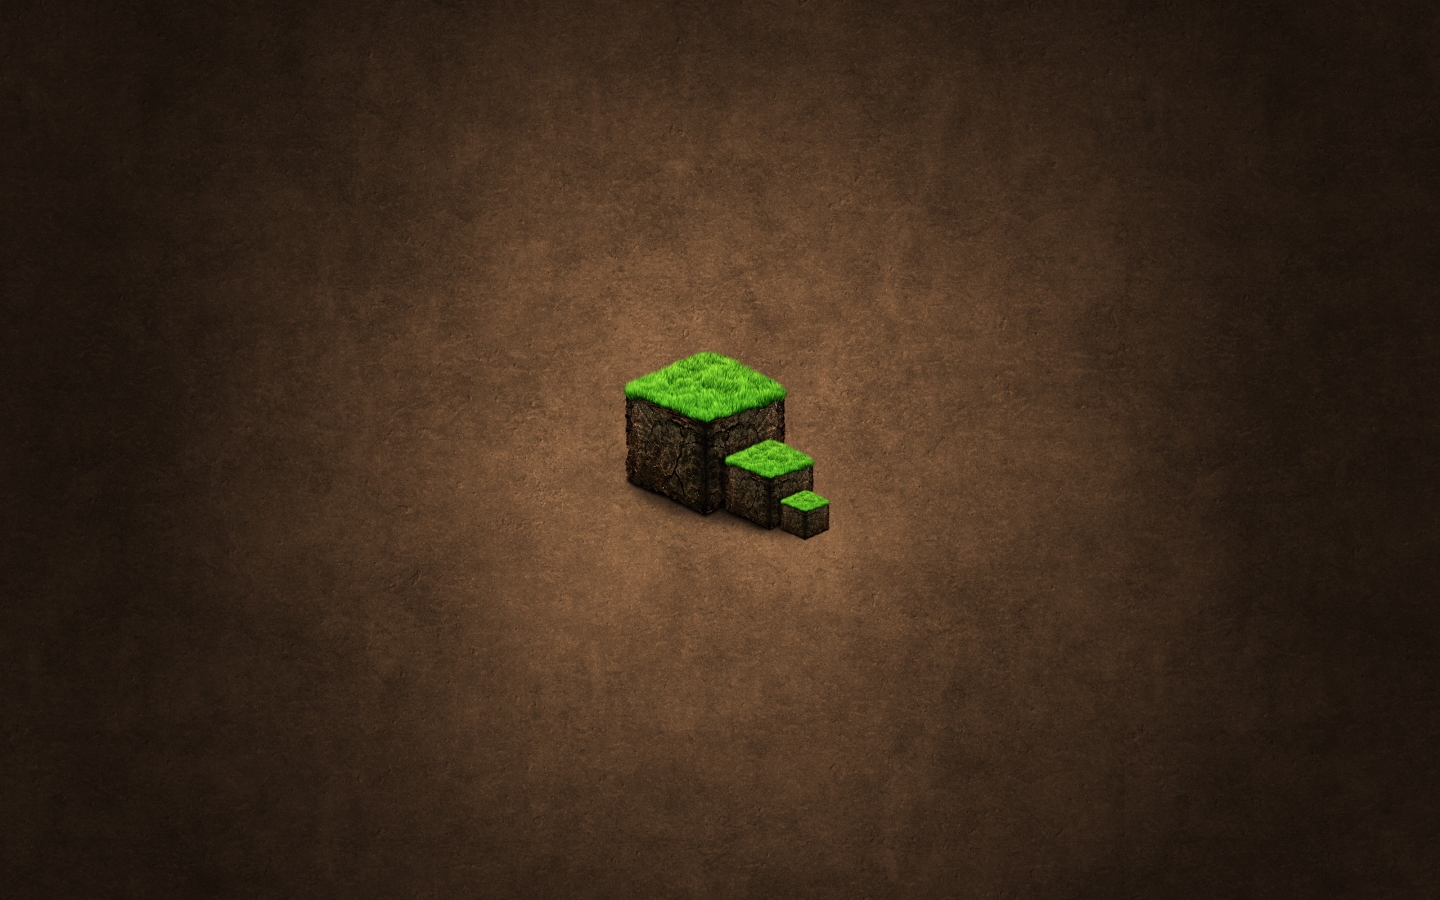 Minecraft Green Cubes for 1440 x 900 widescreen resolution